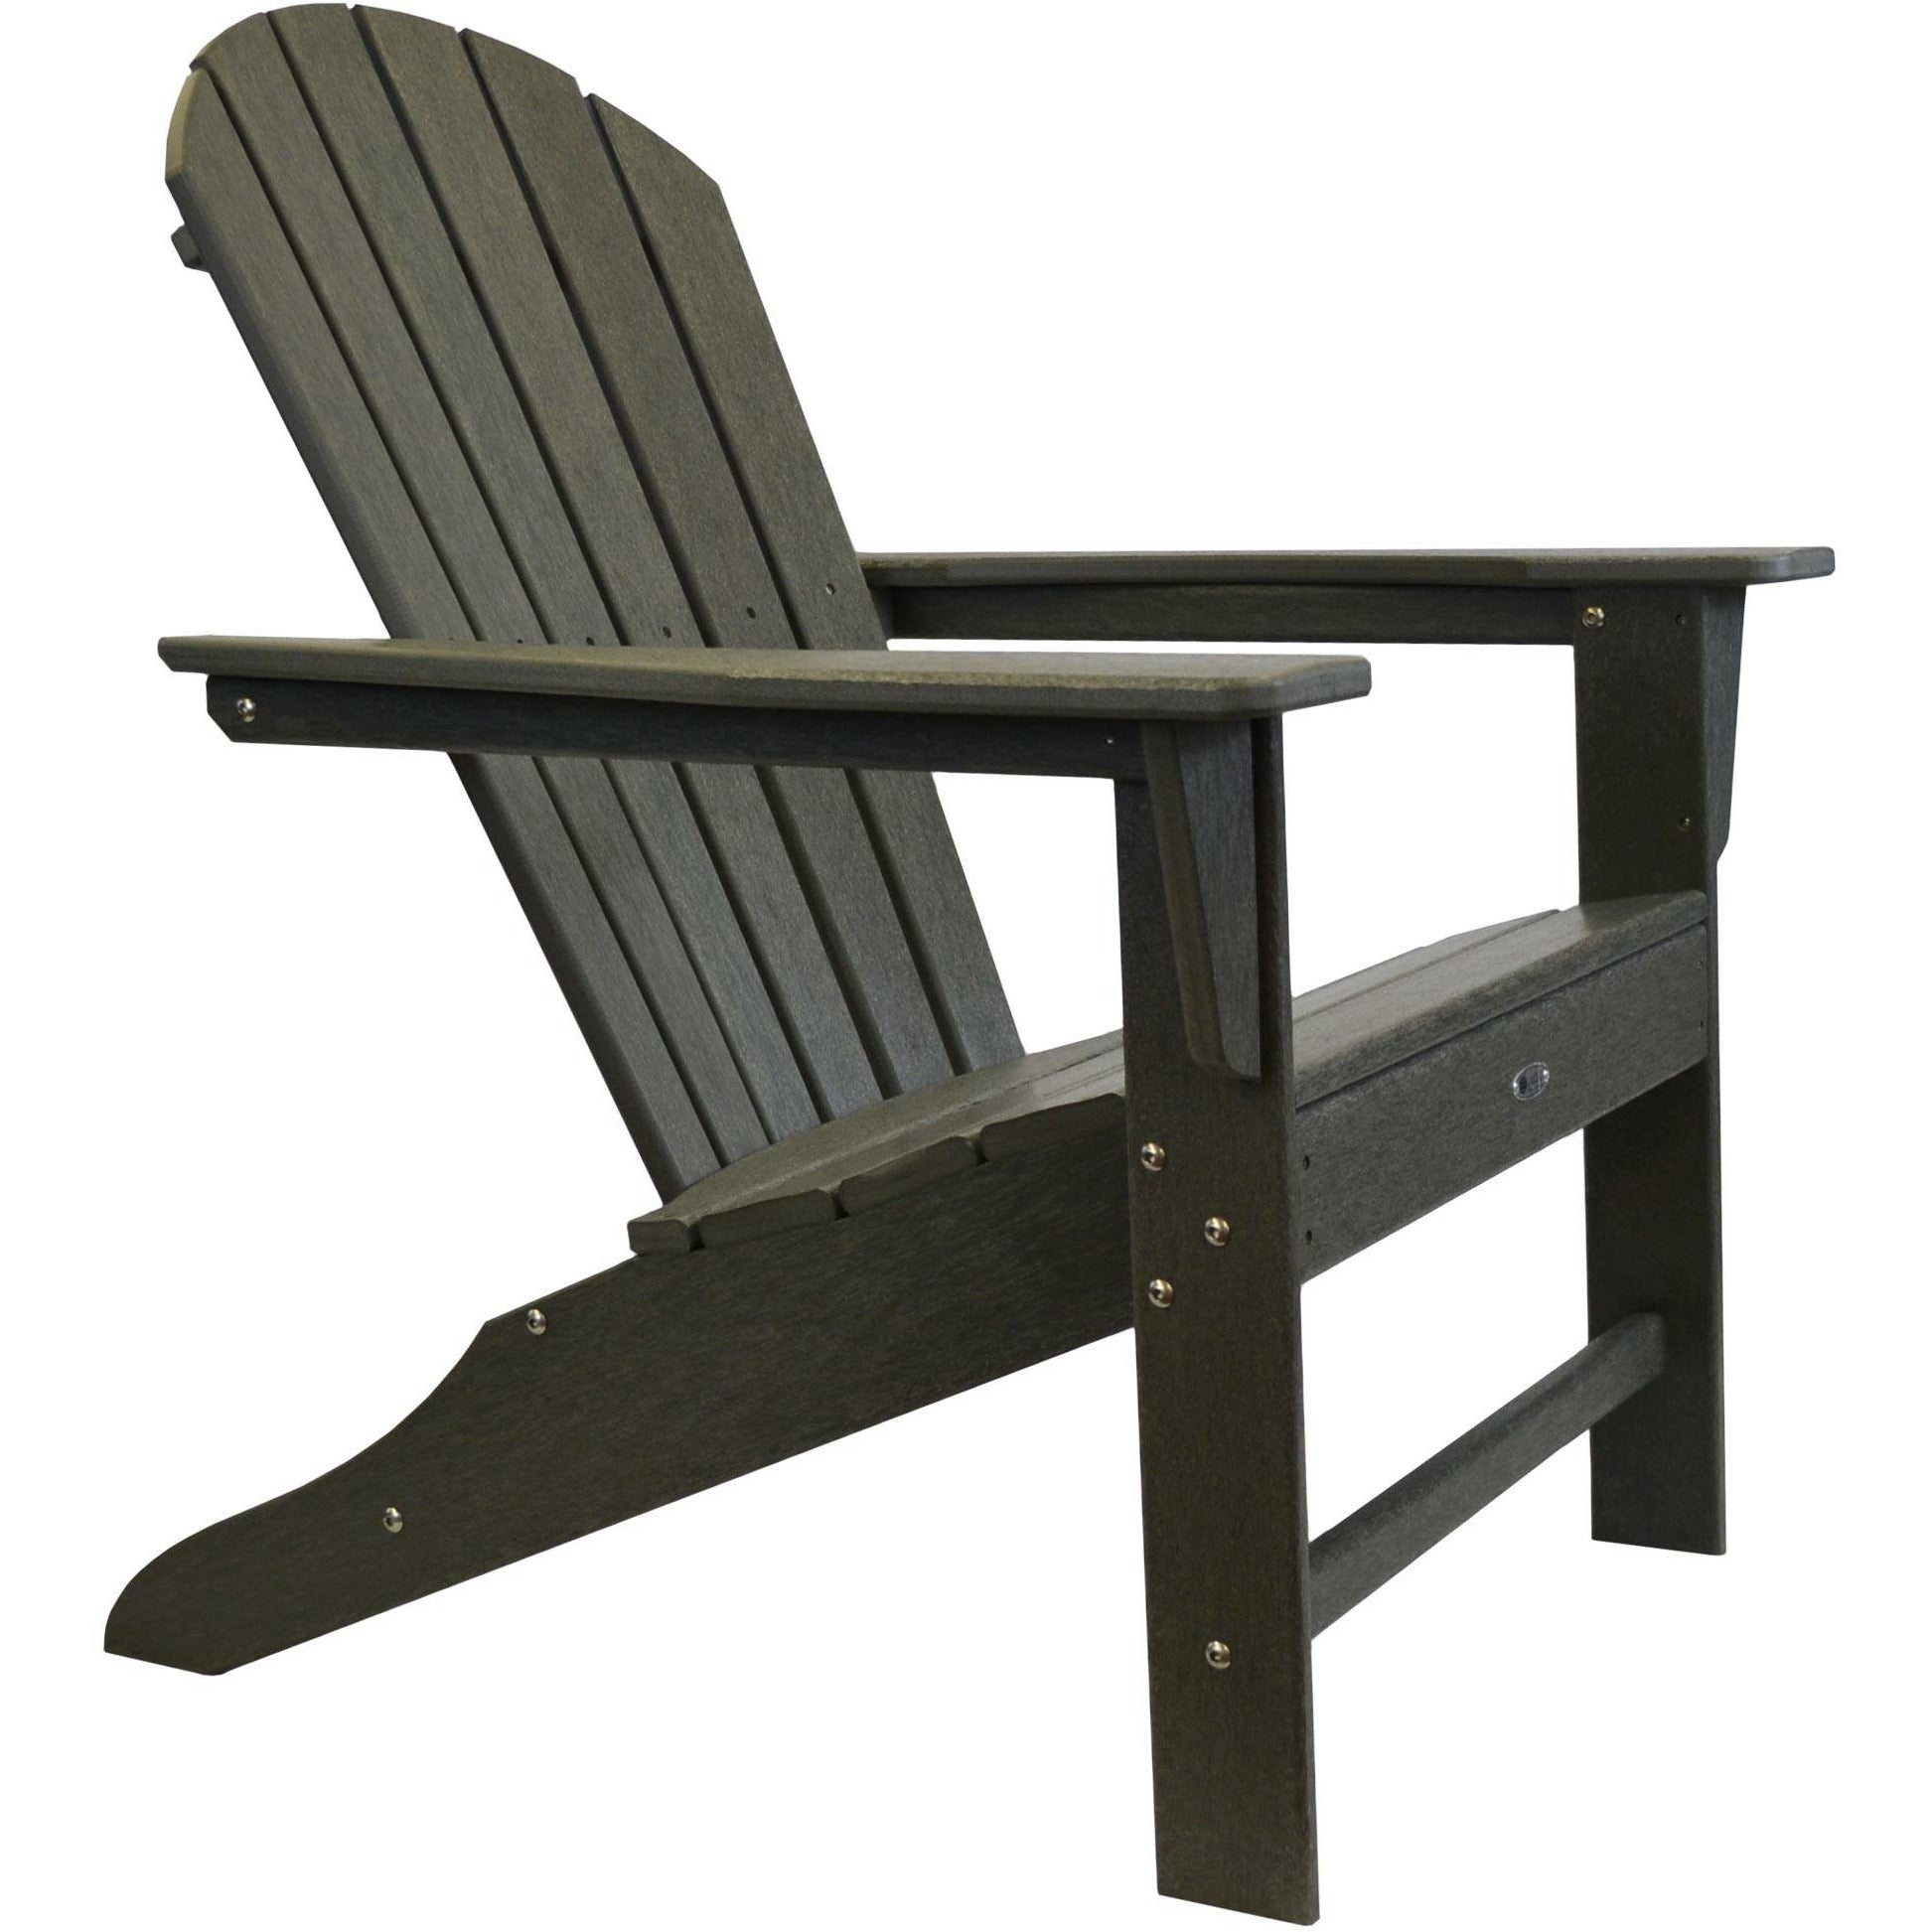 Surf City Poly Adirondack Chair - Color: Grey - Atlas Patio Furniture - Pelican Shops Ski, Pool & Patio